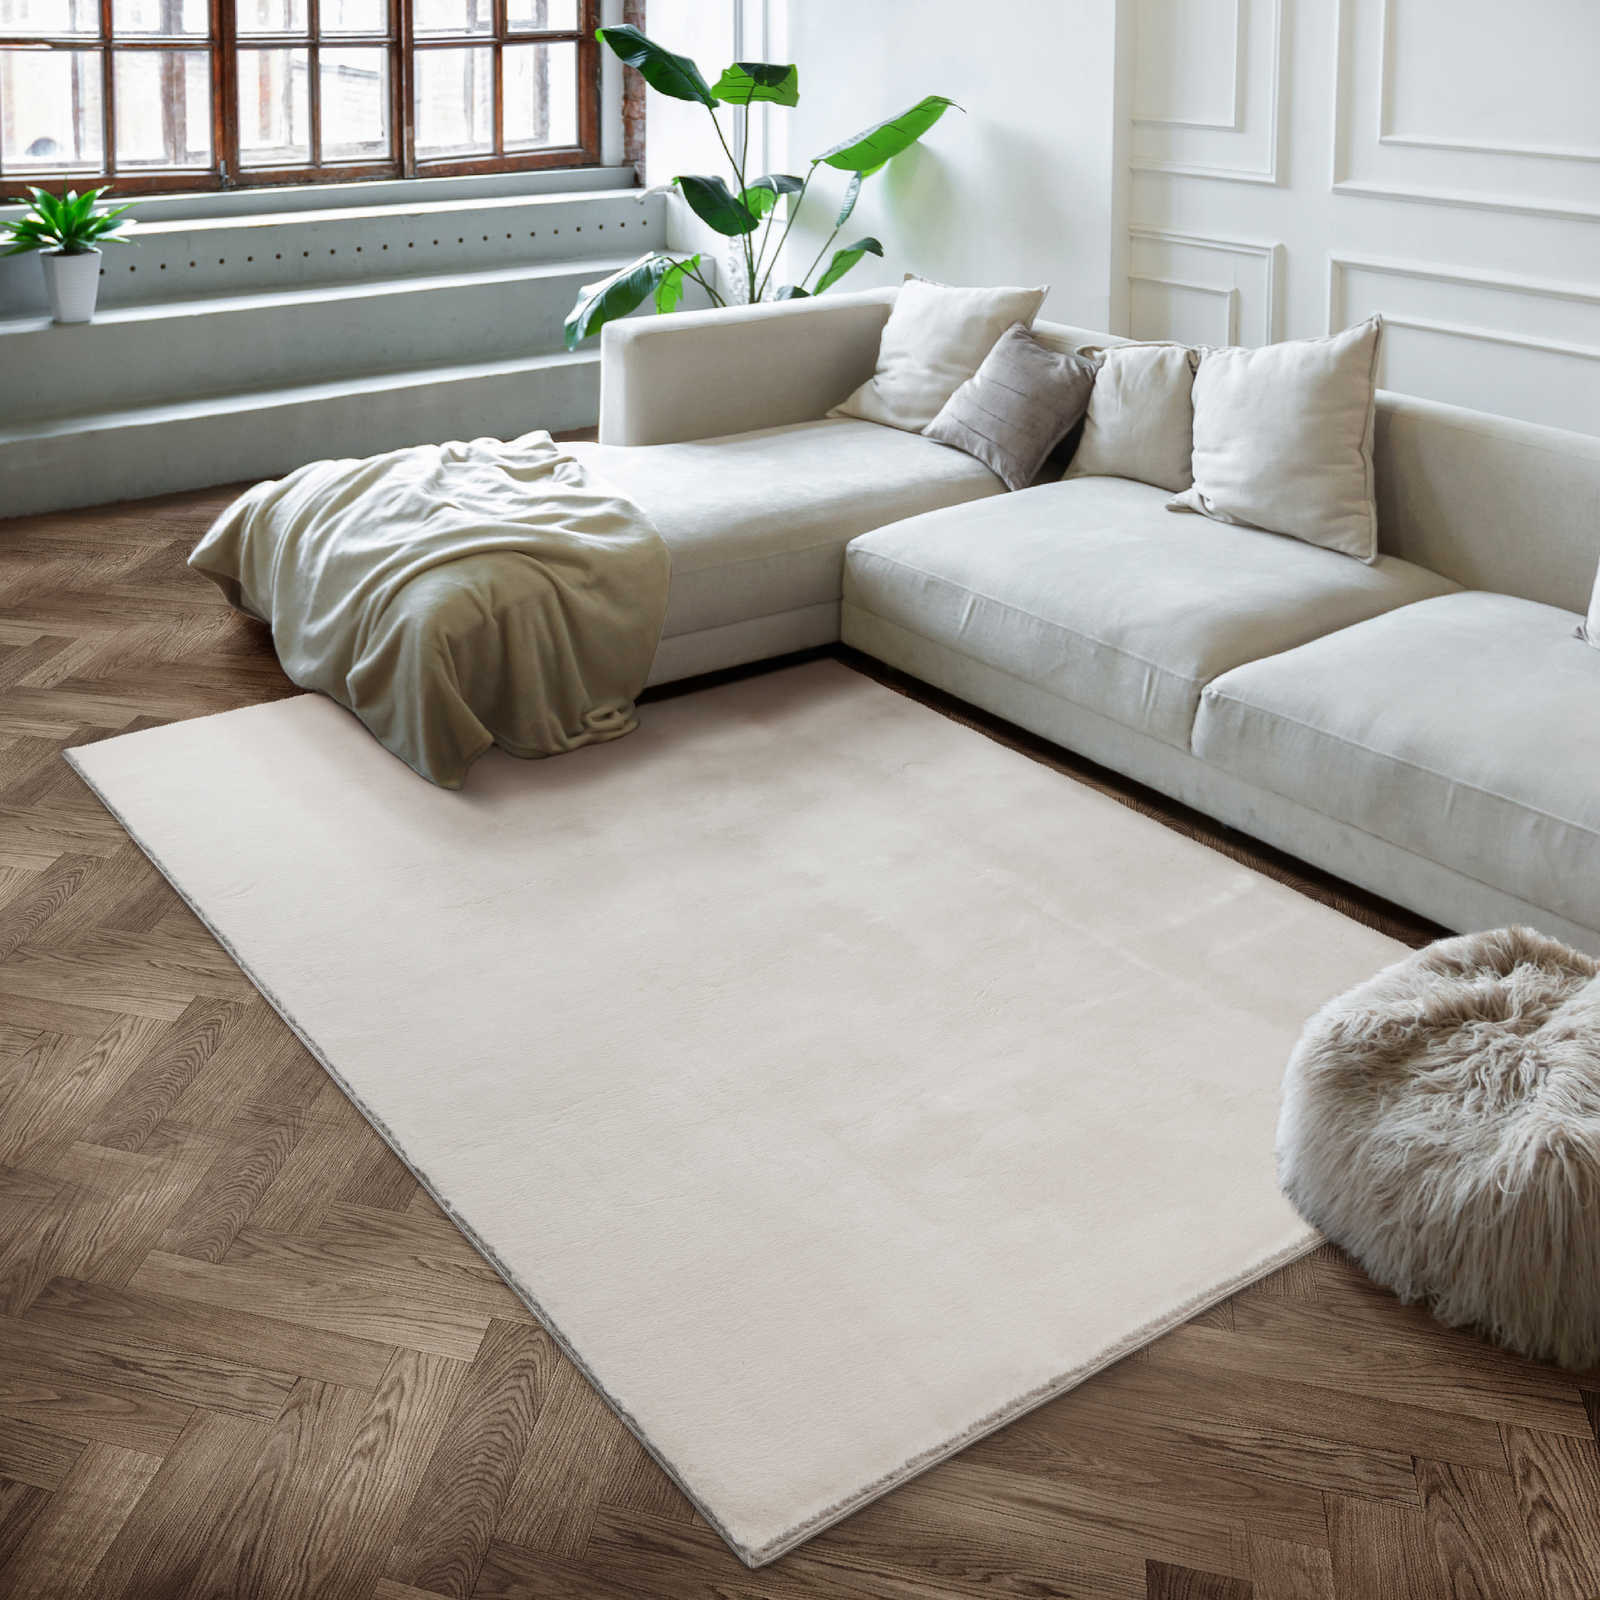 Cuddly soft high pile carpet in light beige - 110 x 60 cm
